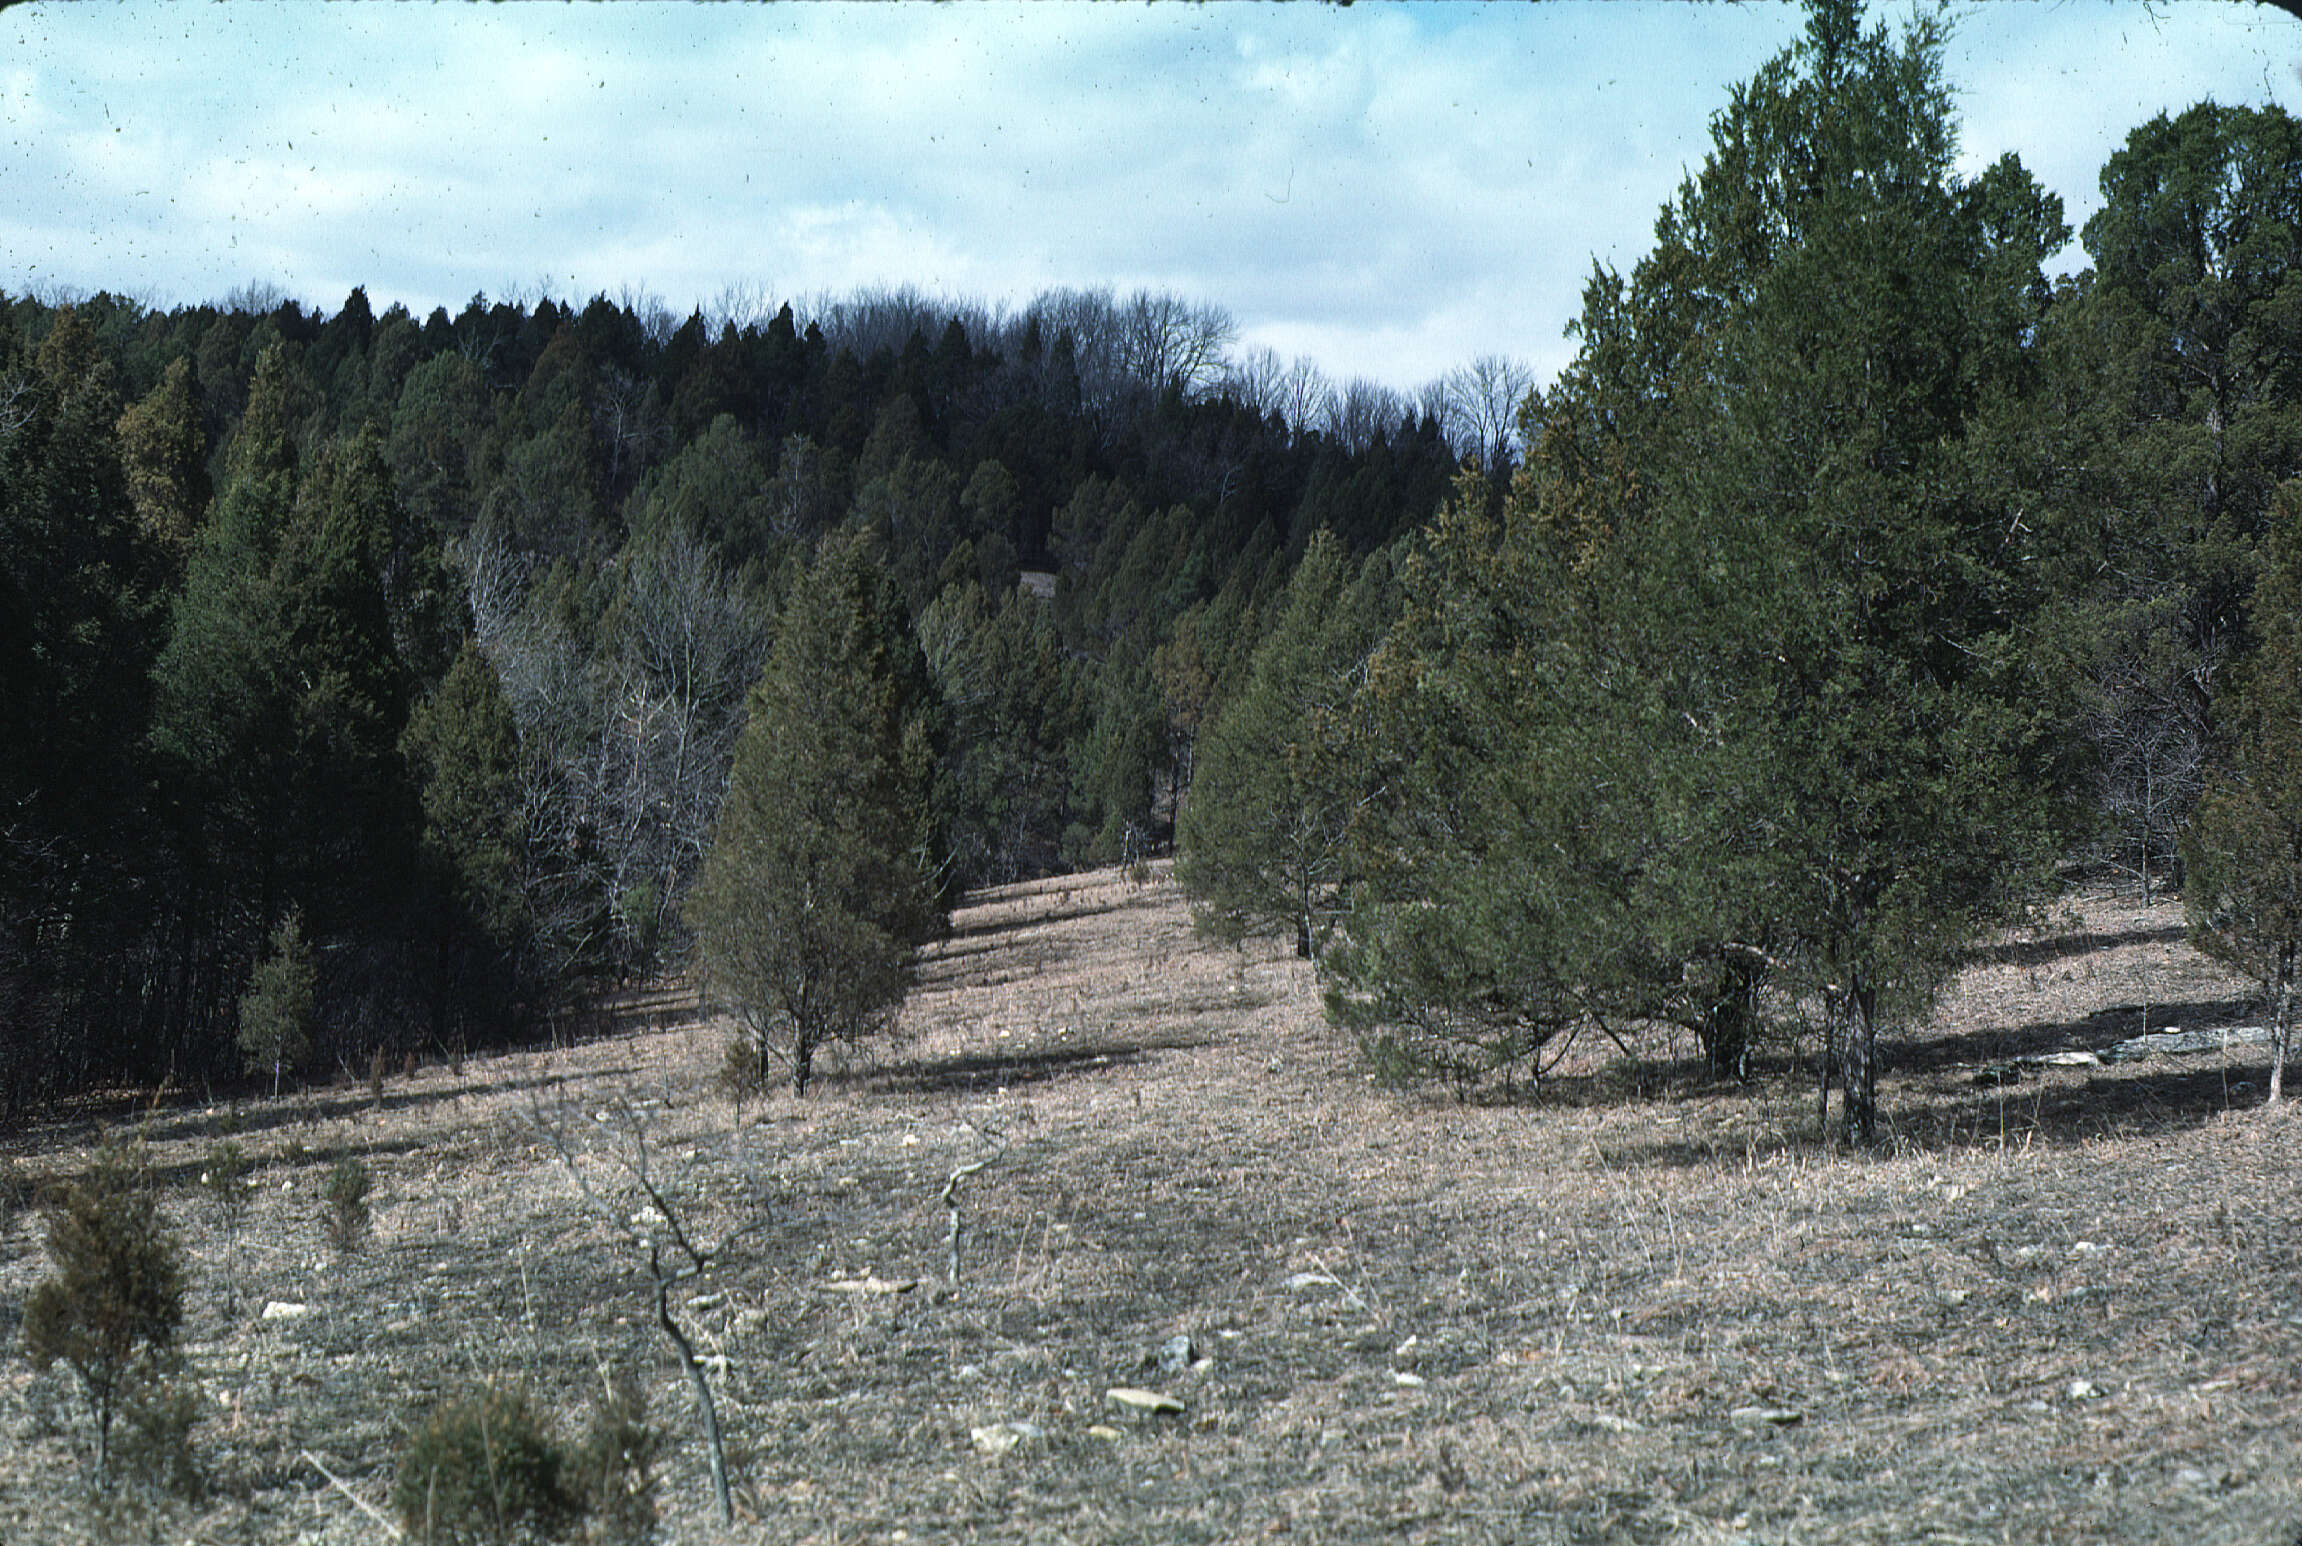 Imagem de Juniperus virginiana L.